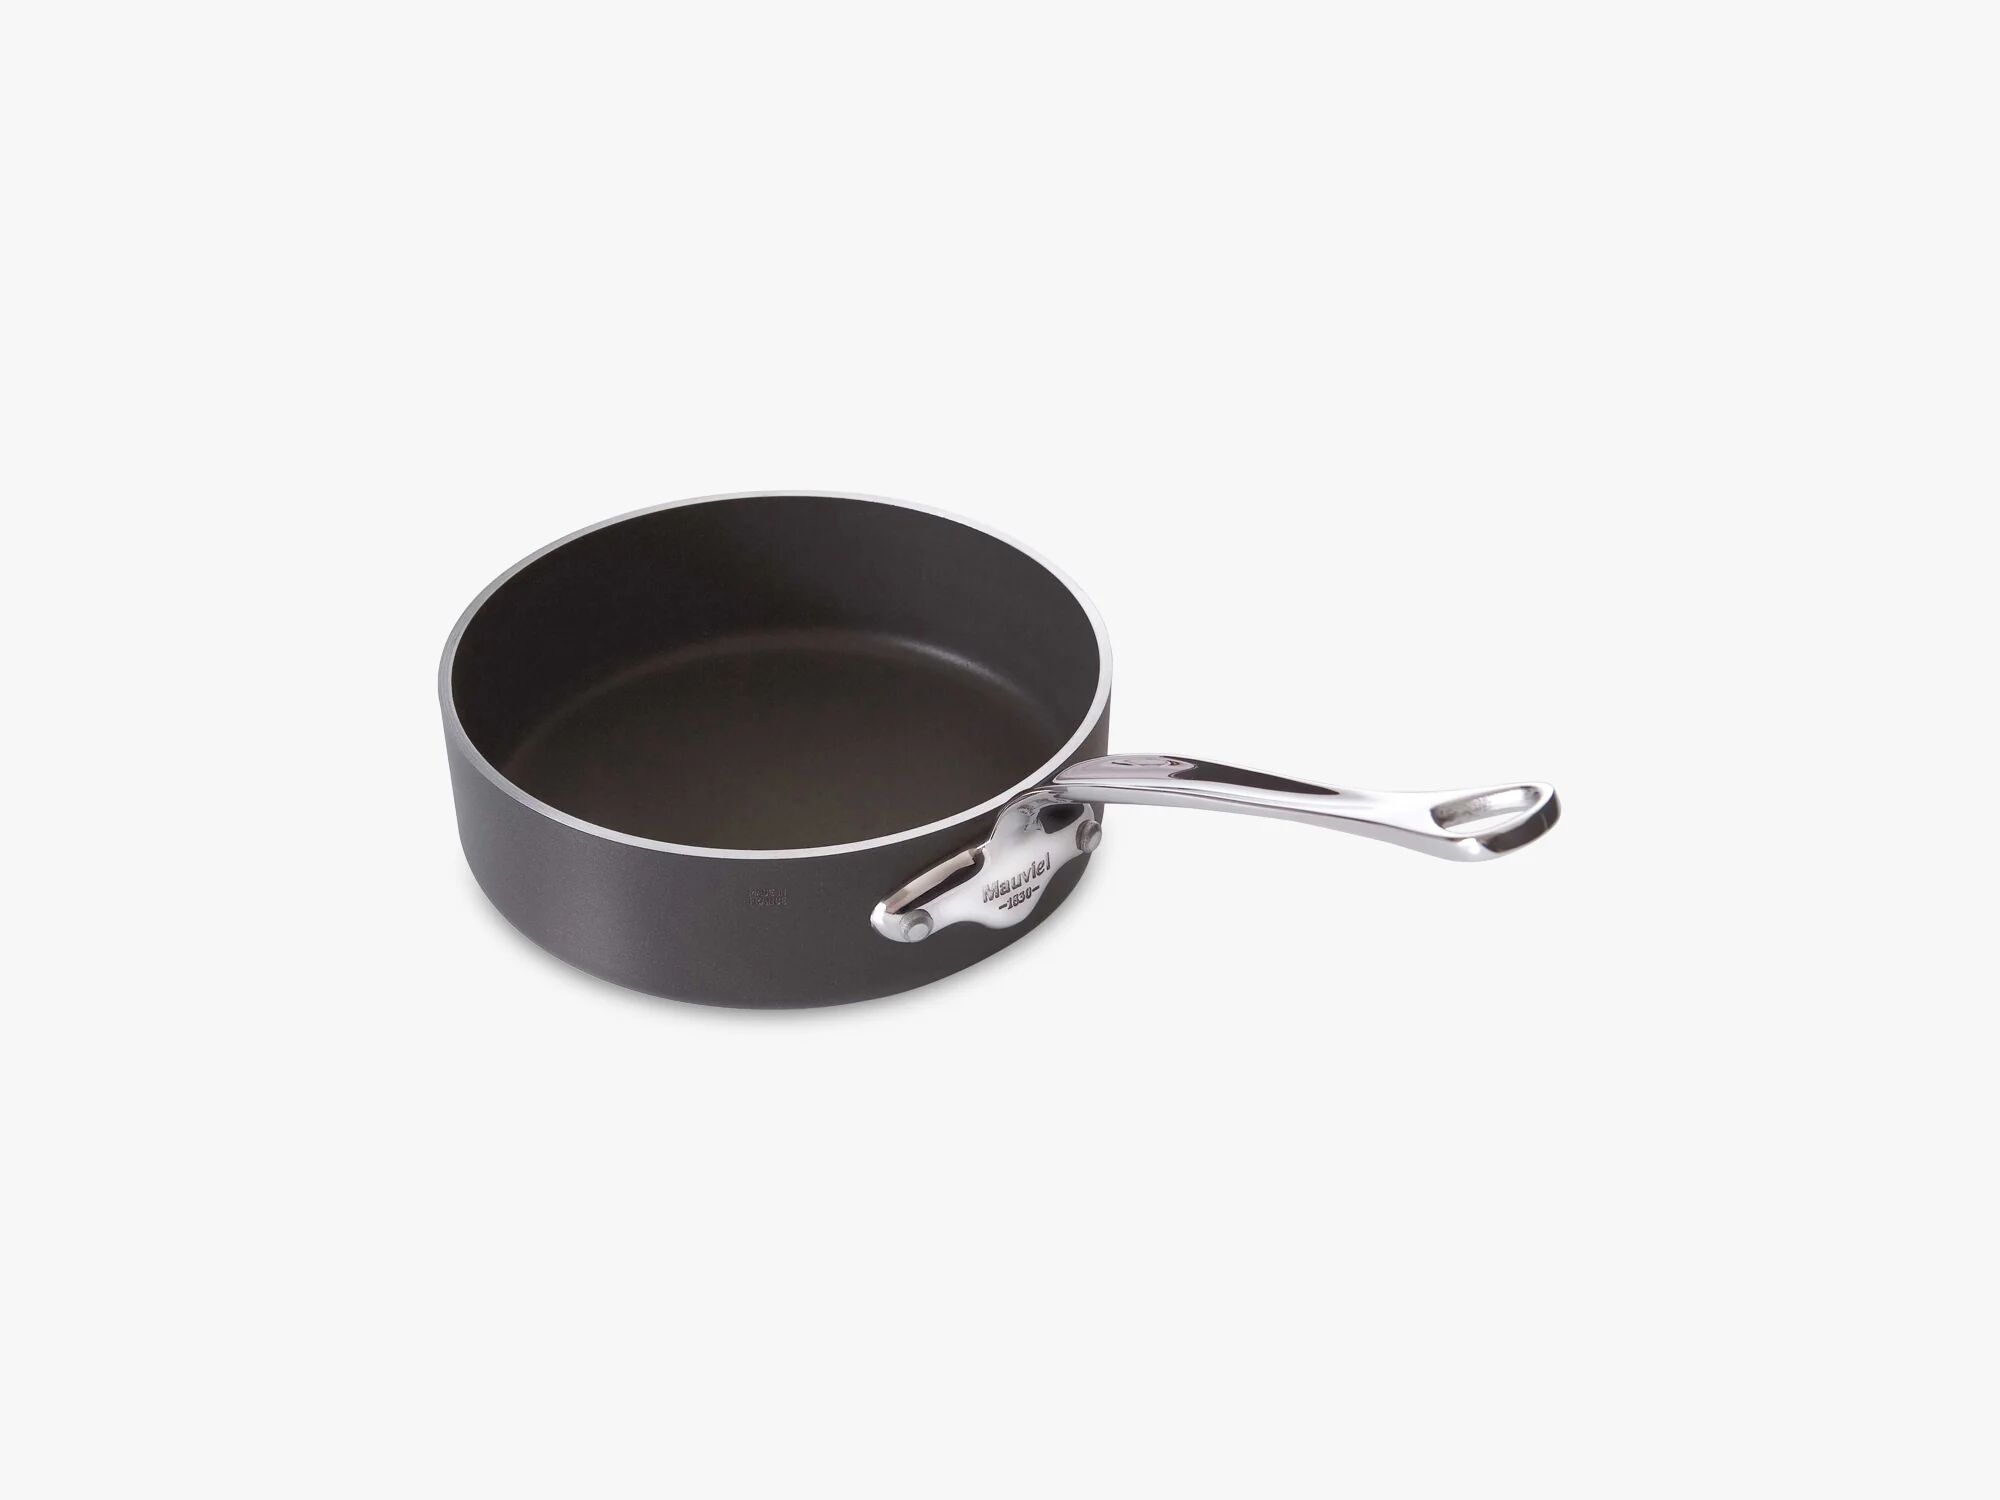 Mauviel M'stone3 Sauter pan svart med stål grep, 6.1 liter